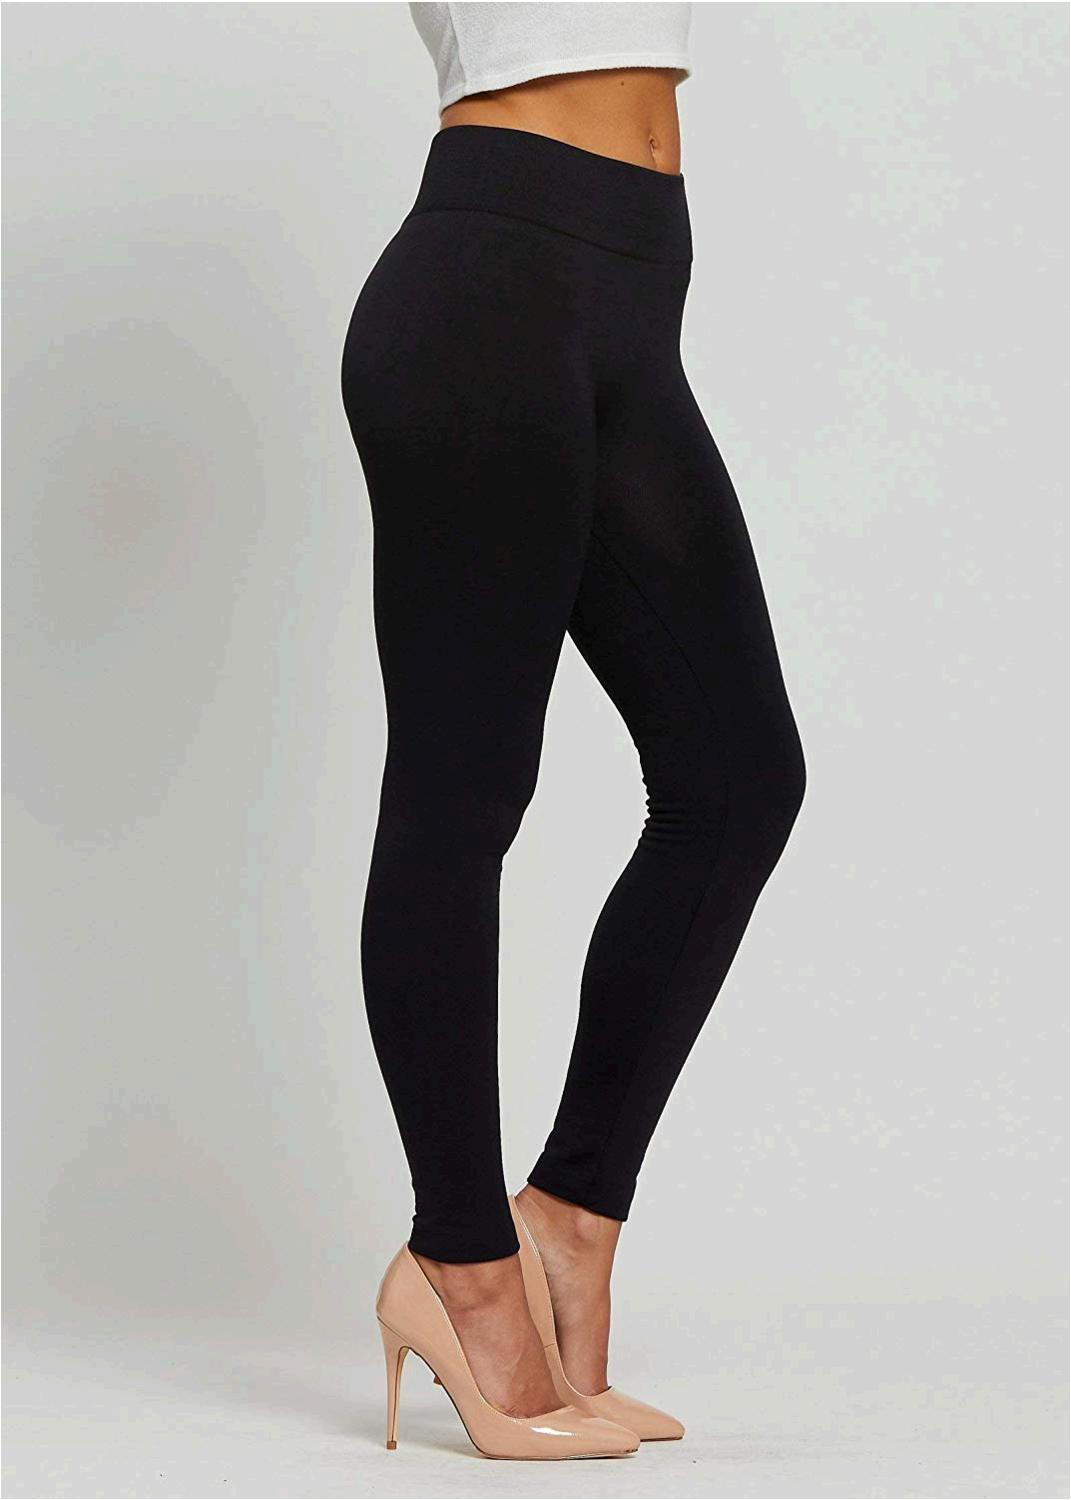  3 Pack Fleece Lined Leggings Women High Waisted Warm Winter  Yoga Pants For Women Thermal Running Workout Leggings